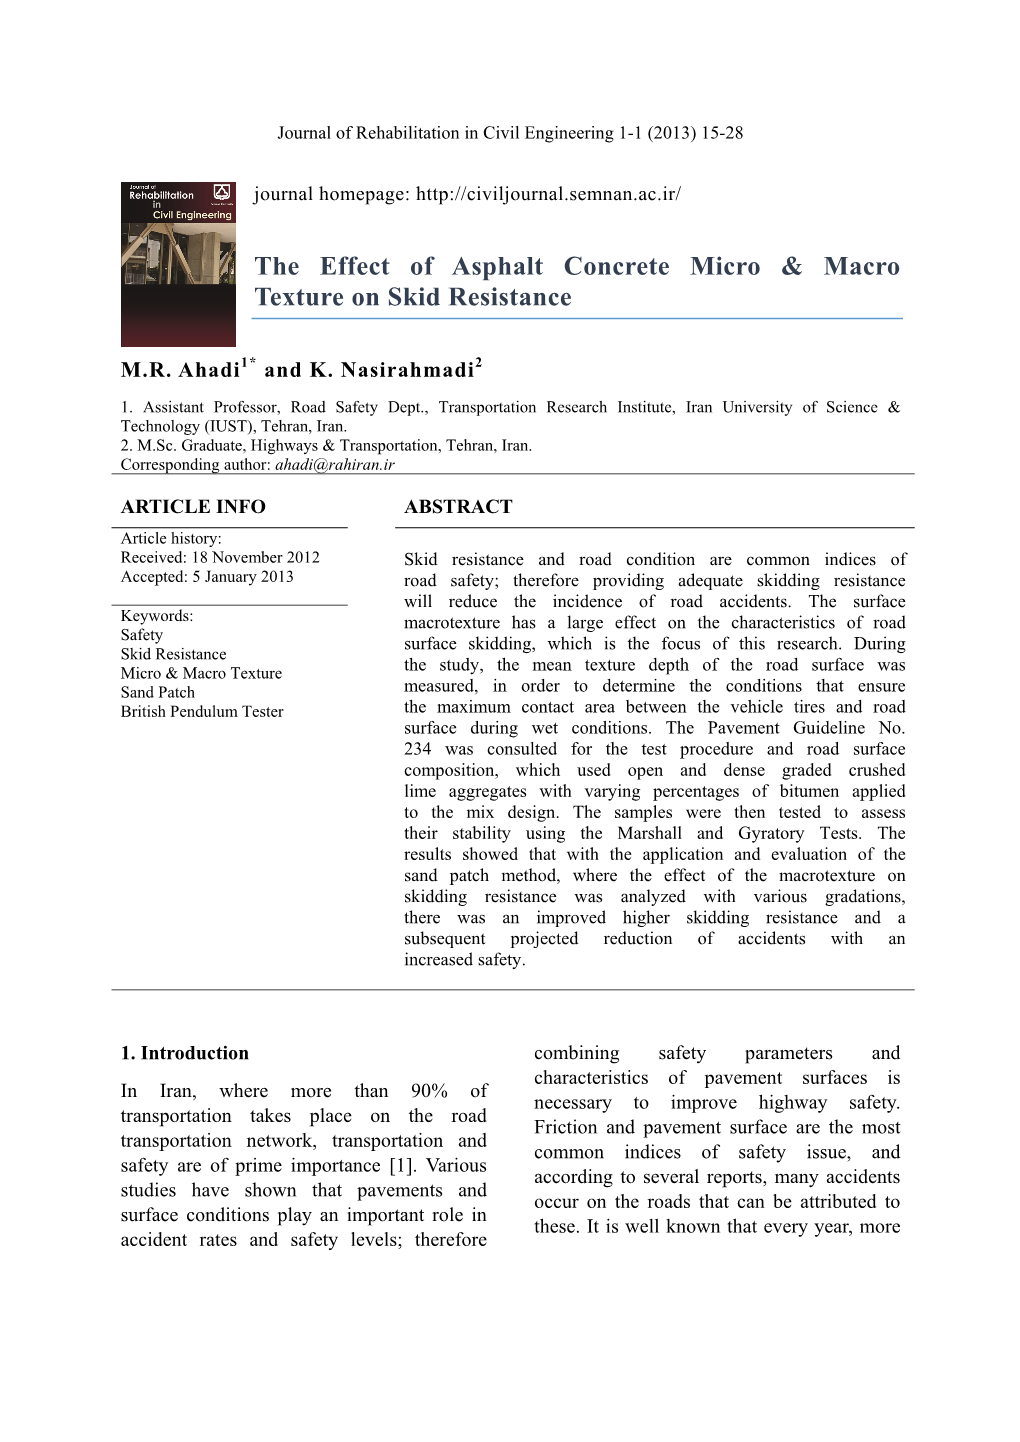 The Effect of Asphalt Concrete Micro & Macro Texture on Skid Resistance